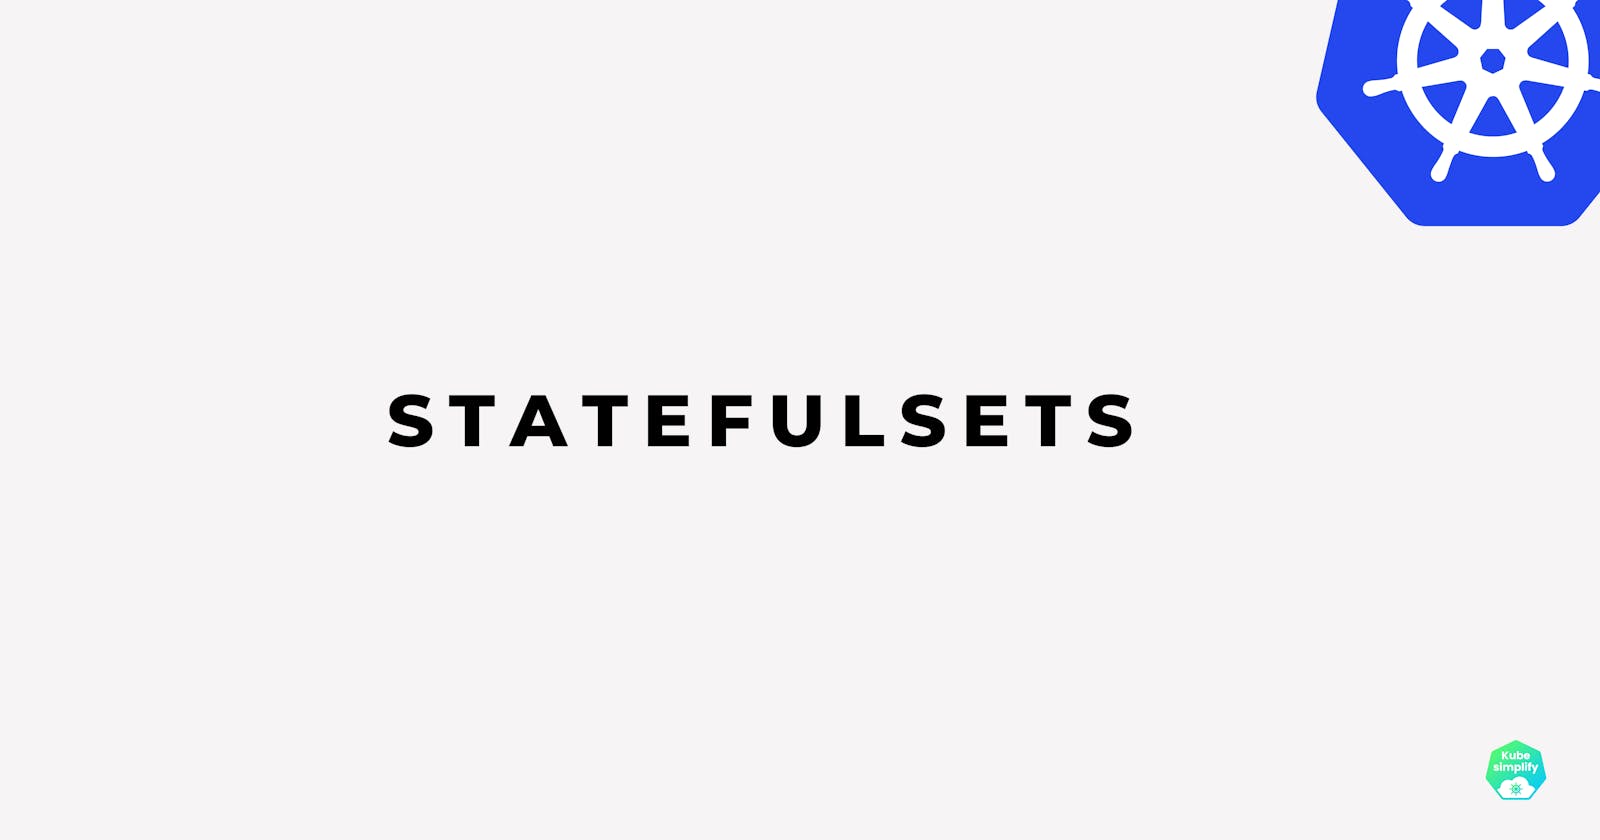 StatefulSets